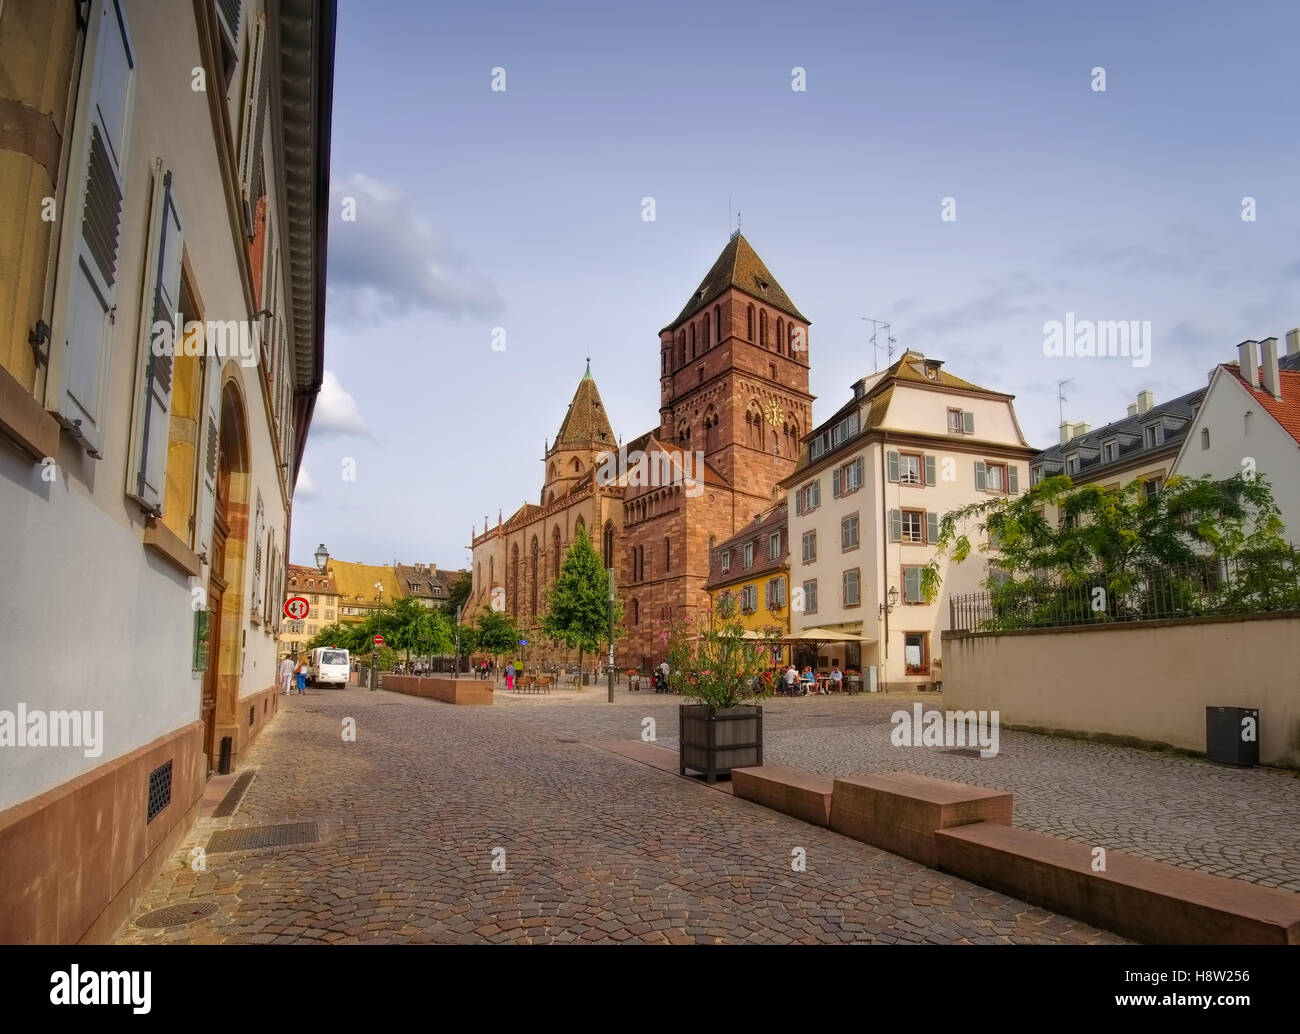 Strassburg Thomaskirche im Elsass, Frankreich - Strasbourg church St. Thomas in  Alsace, France Stock Photo